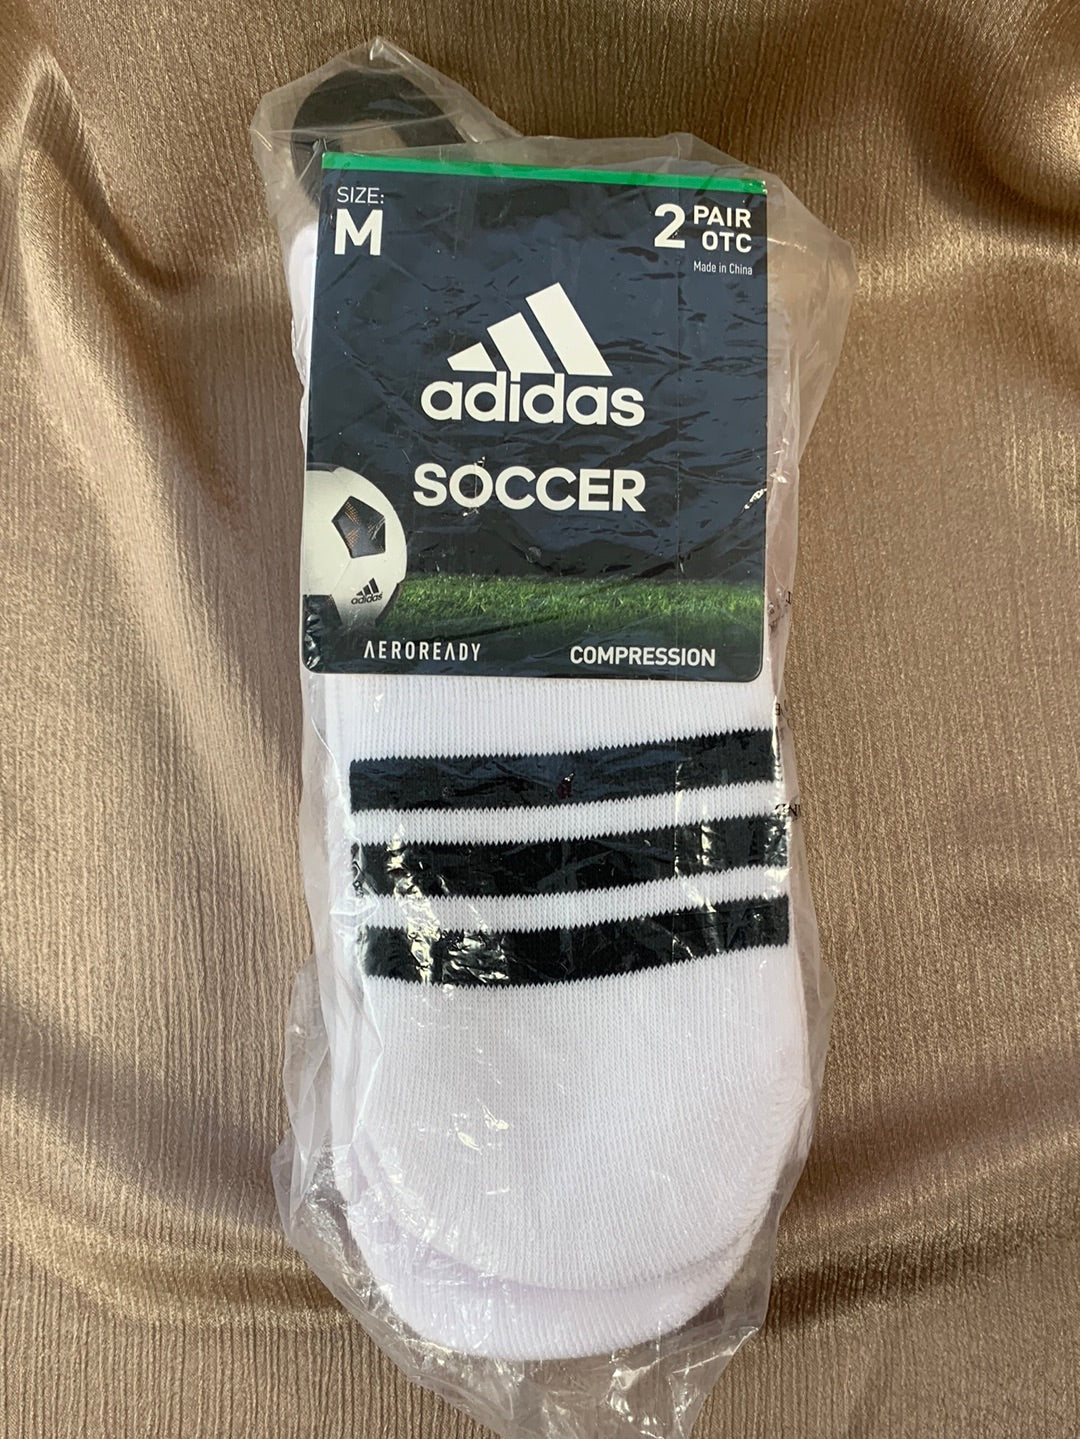 NEW - ADIDAS white black OTC Aeroready Compression Soccer Socks - M